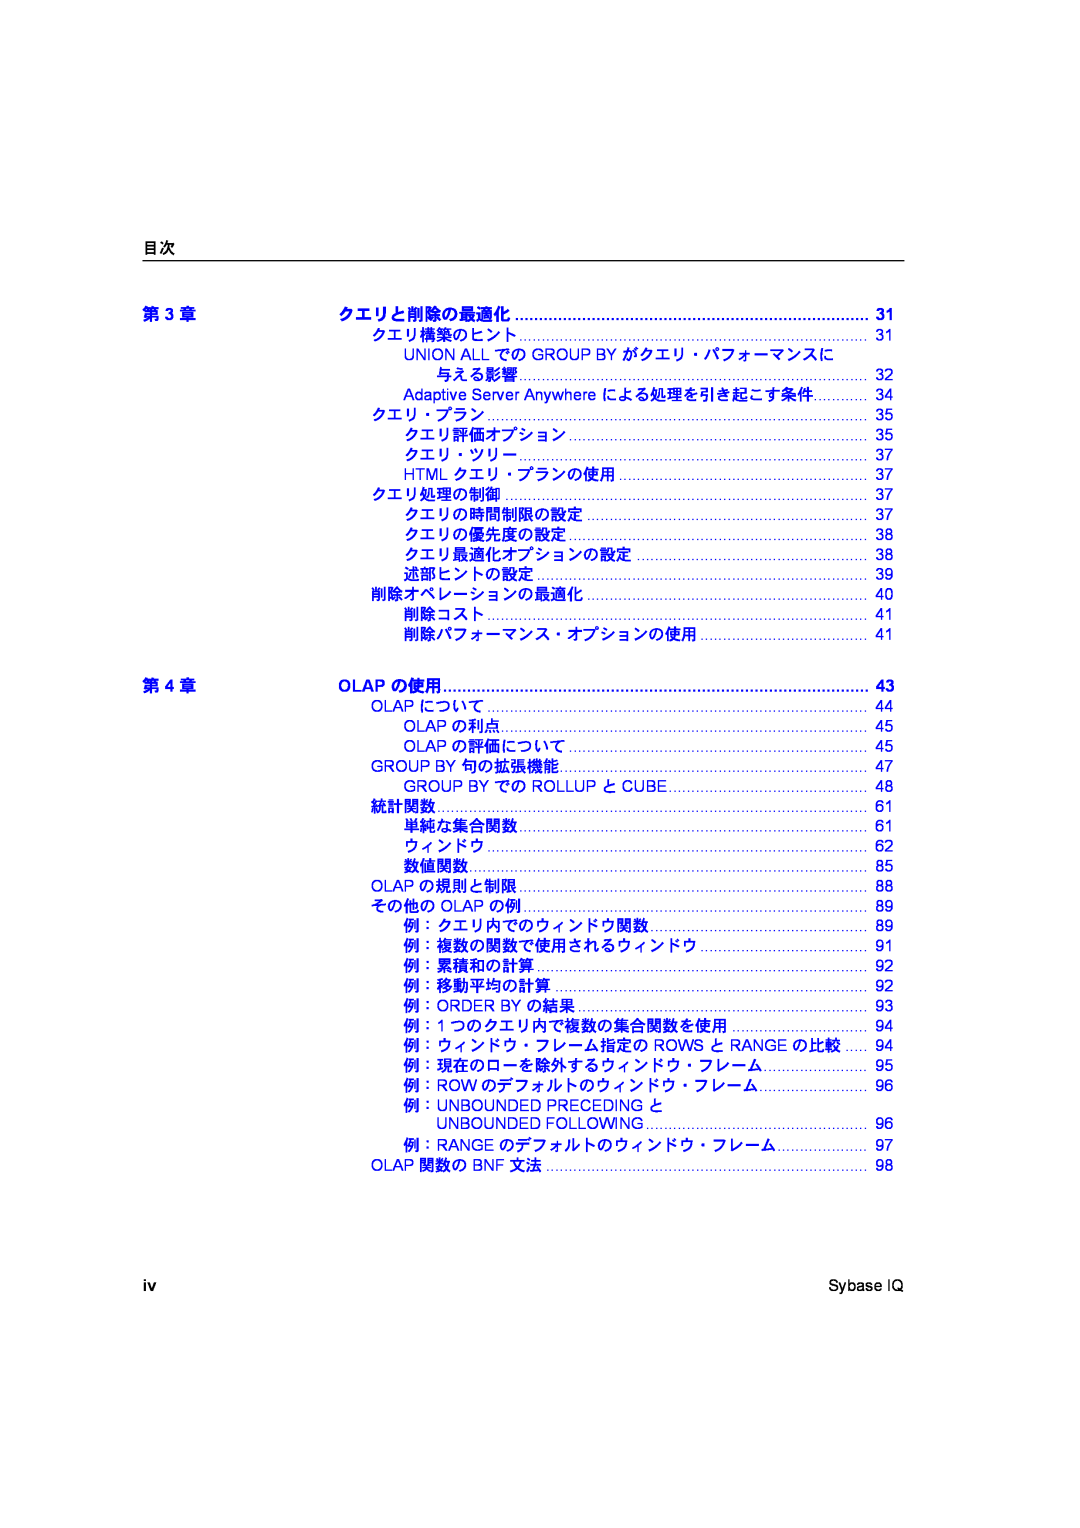 Sybase 12.7 manual 第 3 章, 第 4 章, 例：ウィンドウ・フレーム指定の Rows と Range の比較, Sybase IQ 